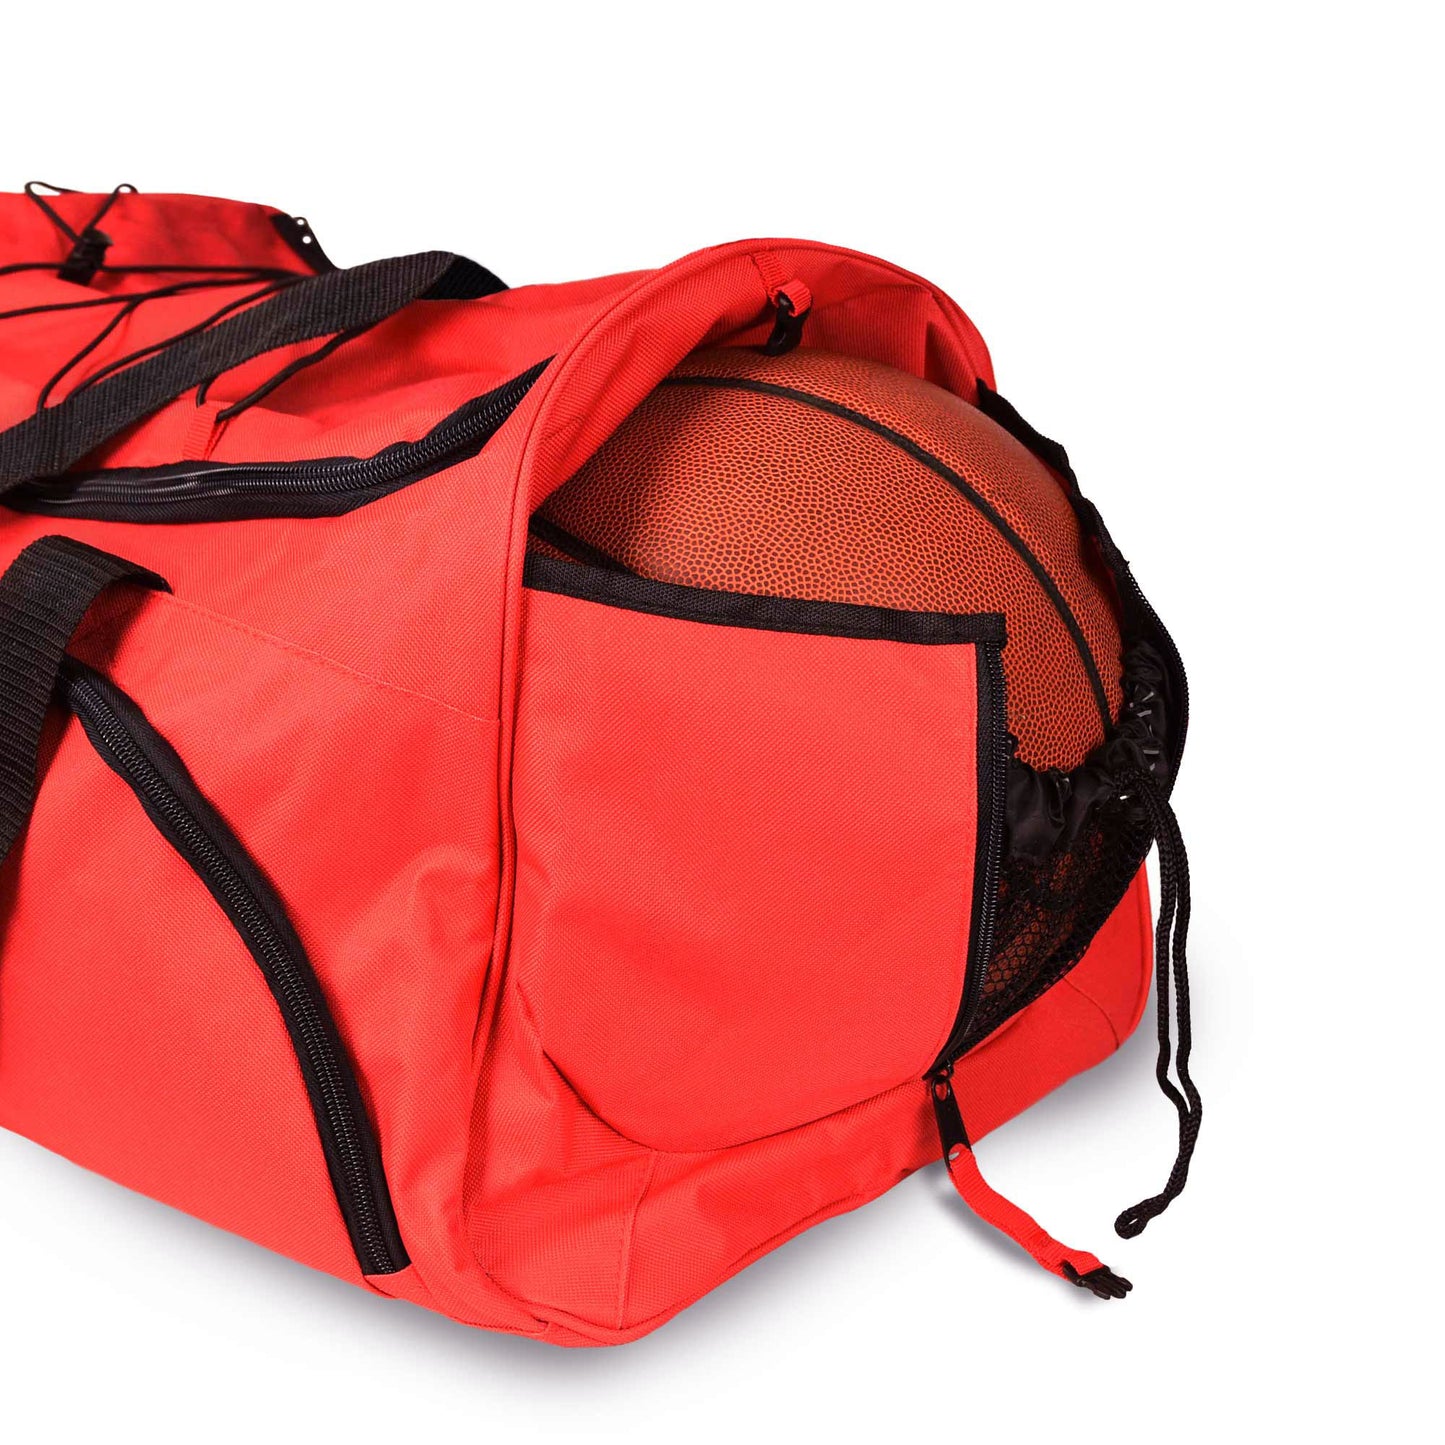 Dalix 24" Basketball Duffel Bag